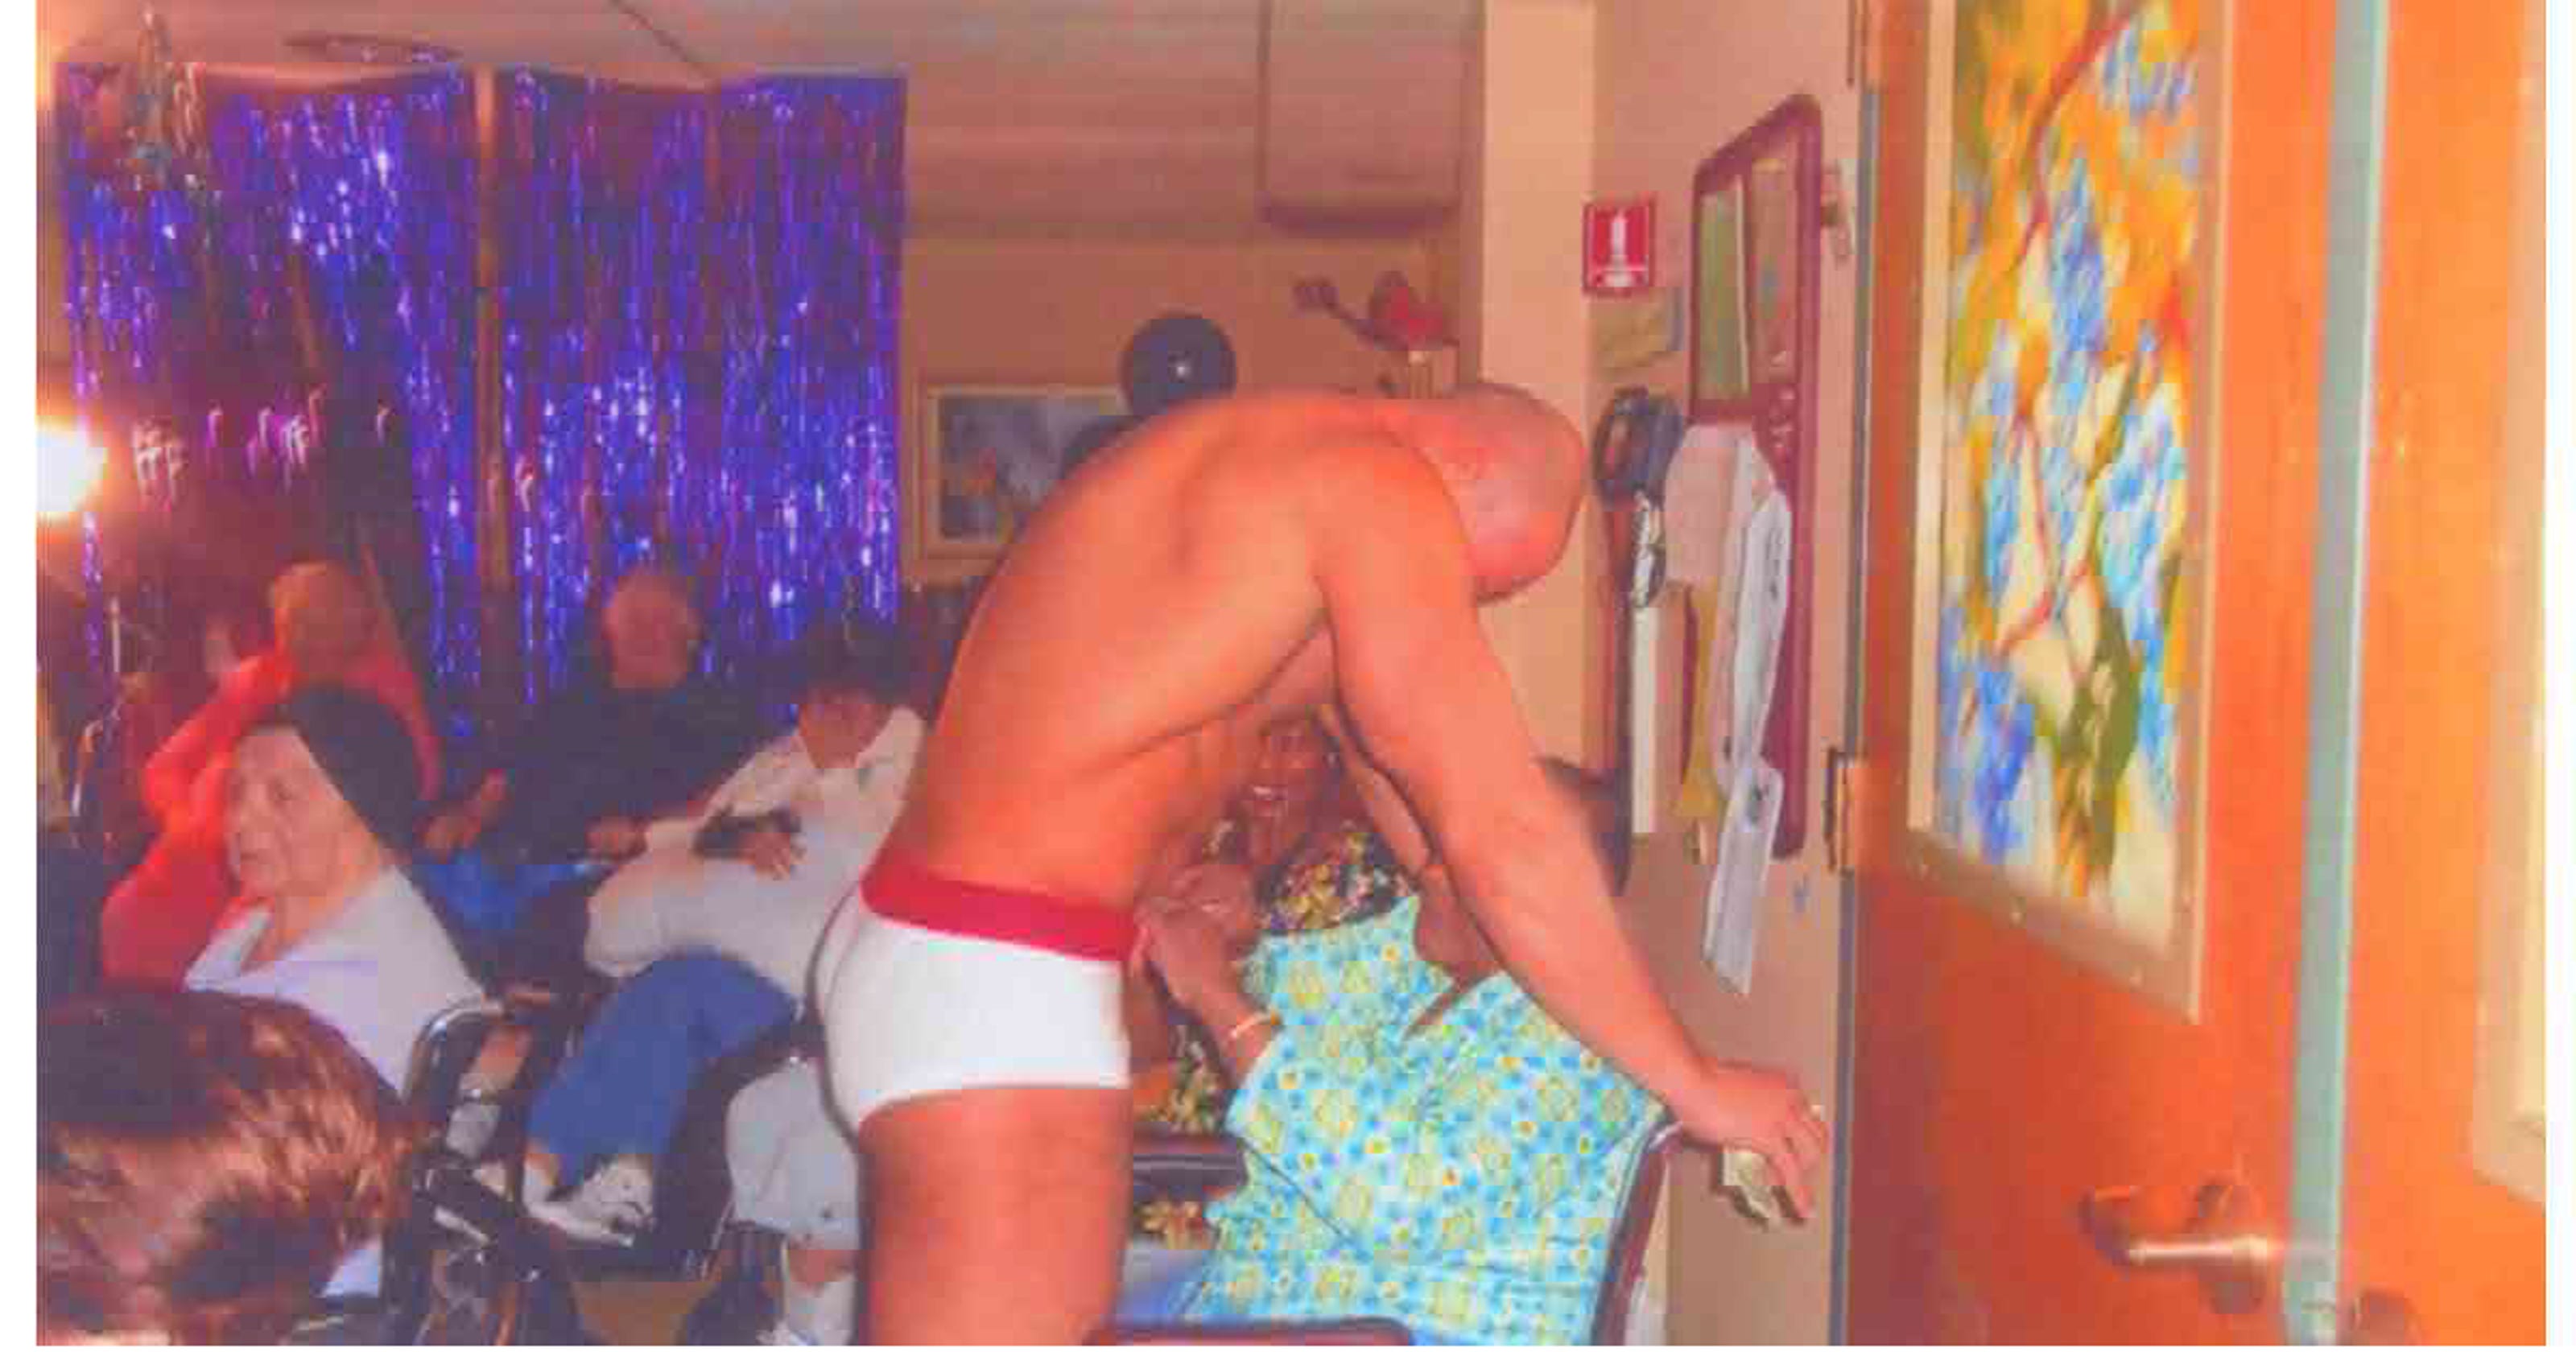 New York Nursing Home Sued Over Male Stripper